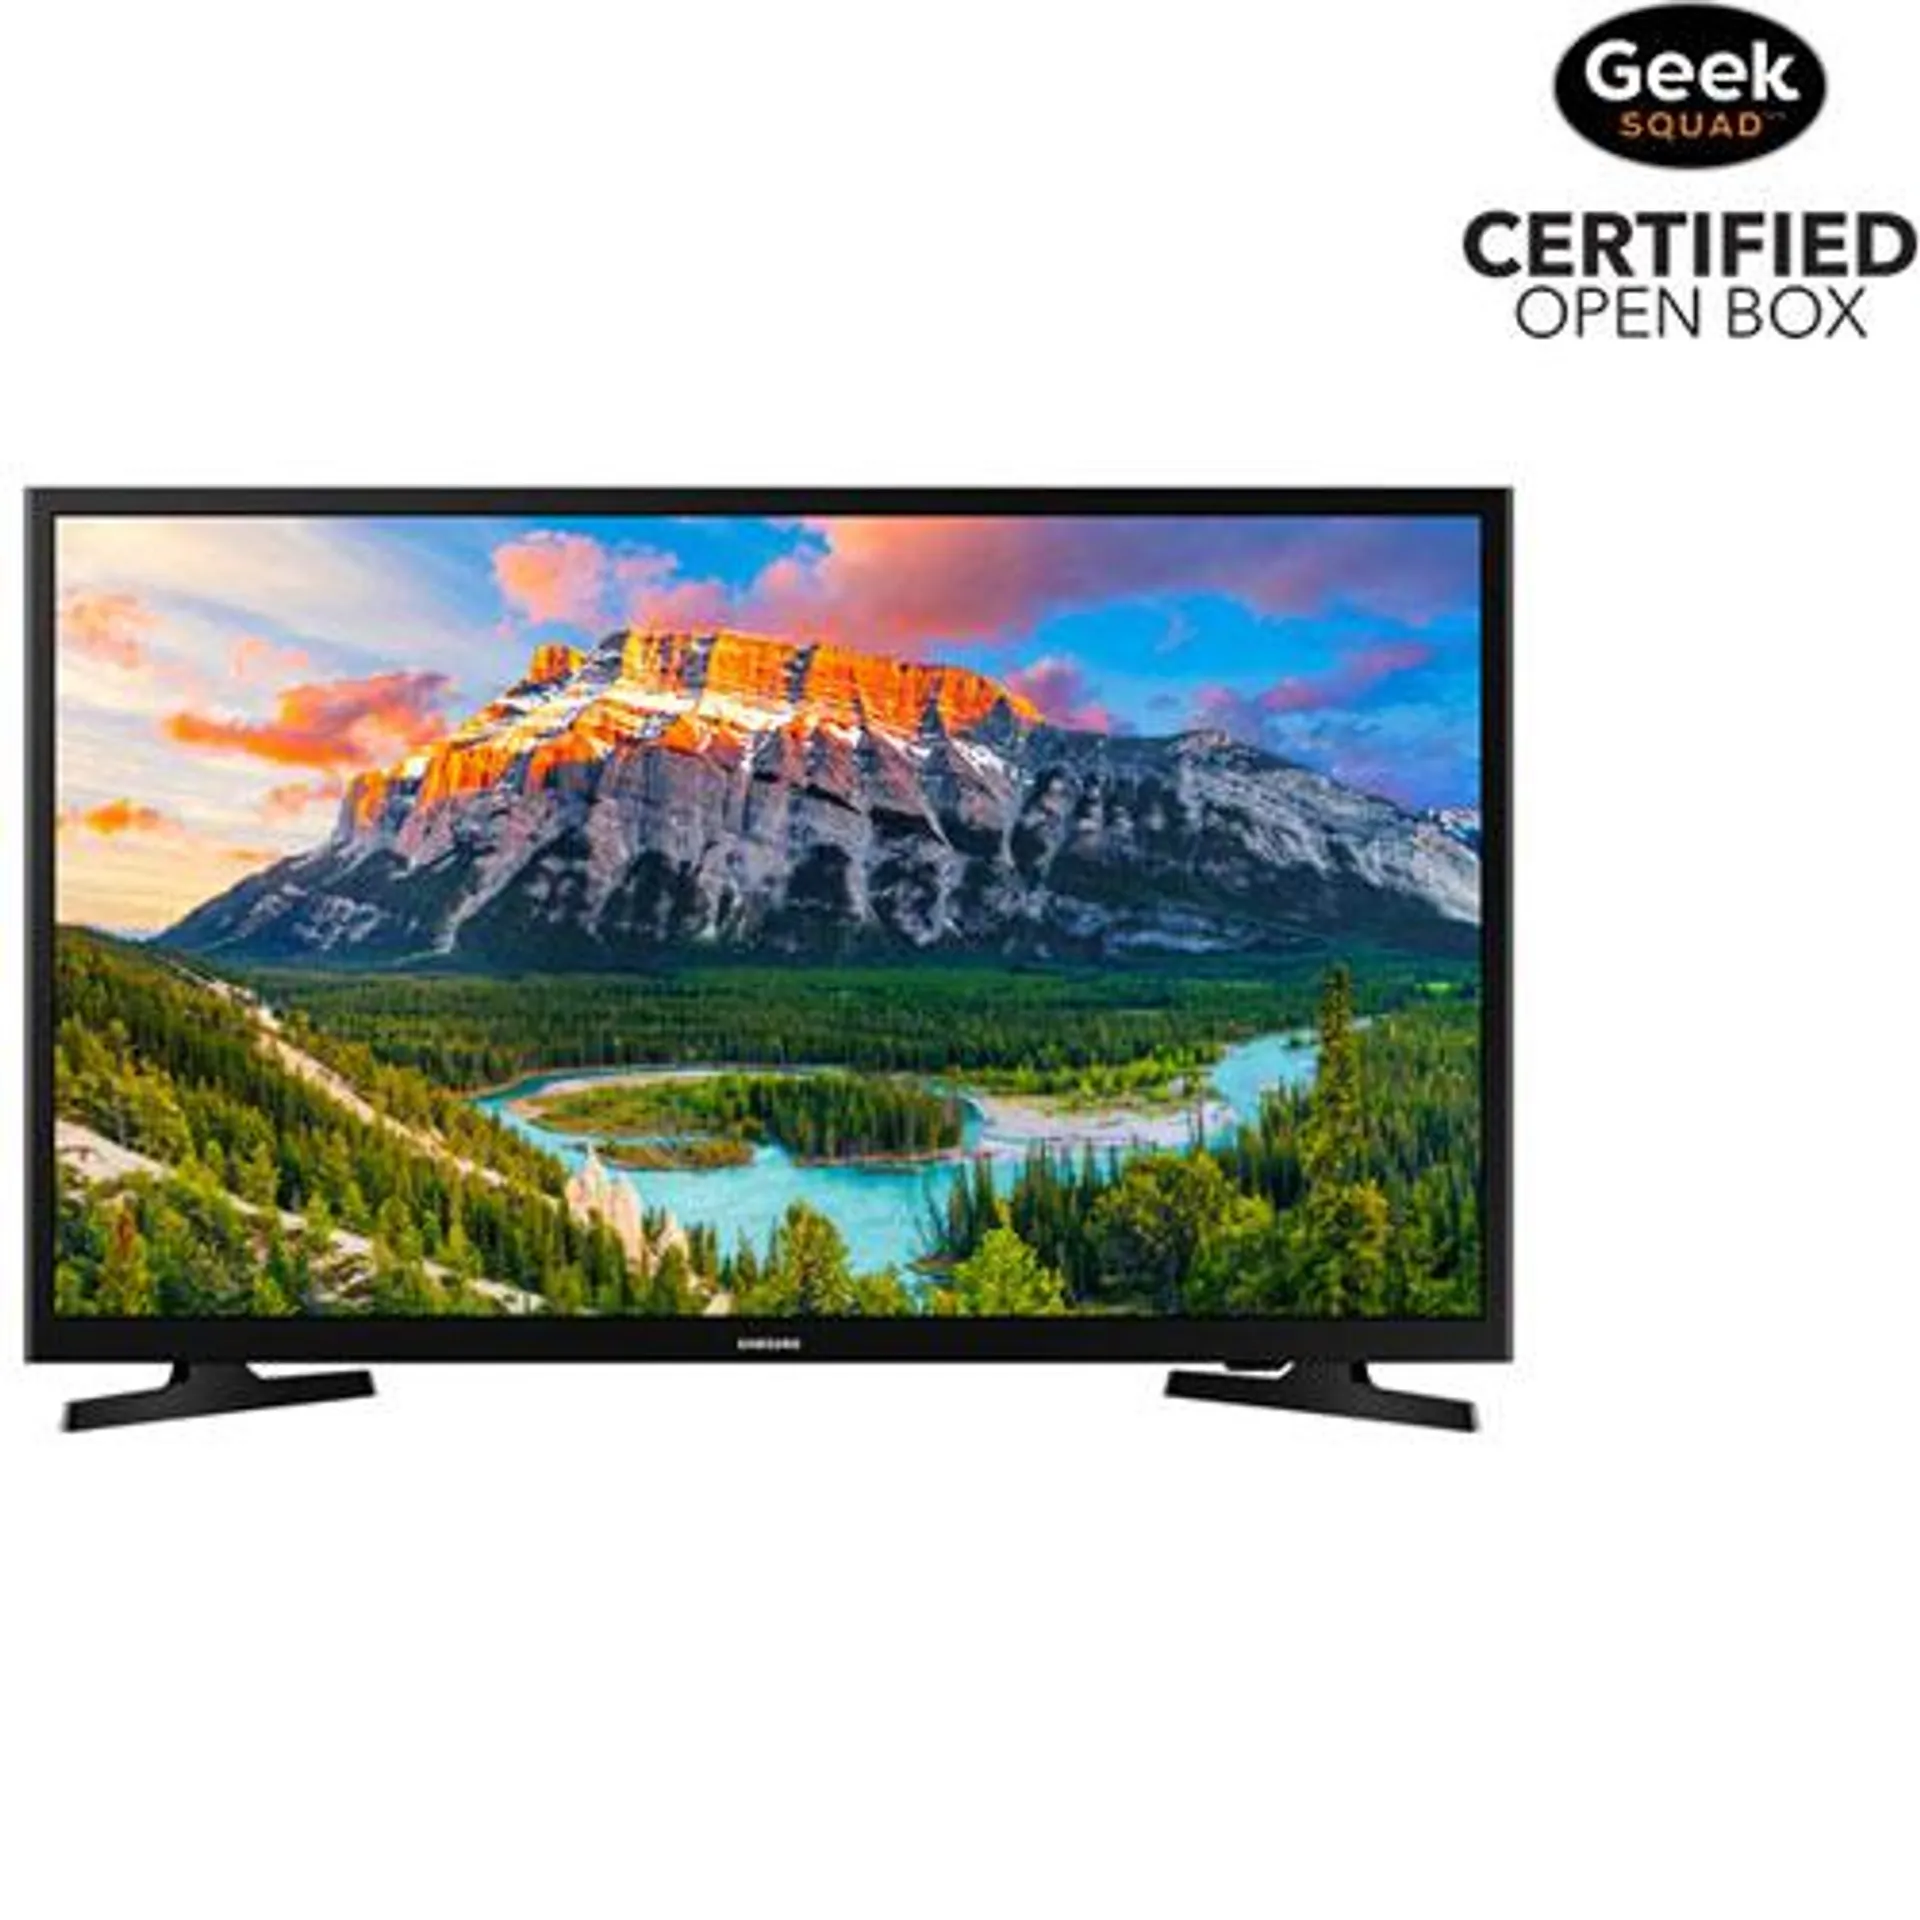 Open Box - Samsung 32" 1080p HD LED Tizen Smart TV (UN32N5300AFXZC) - Glossy Black